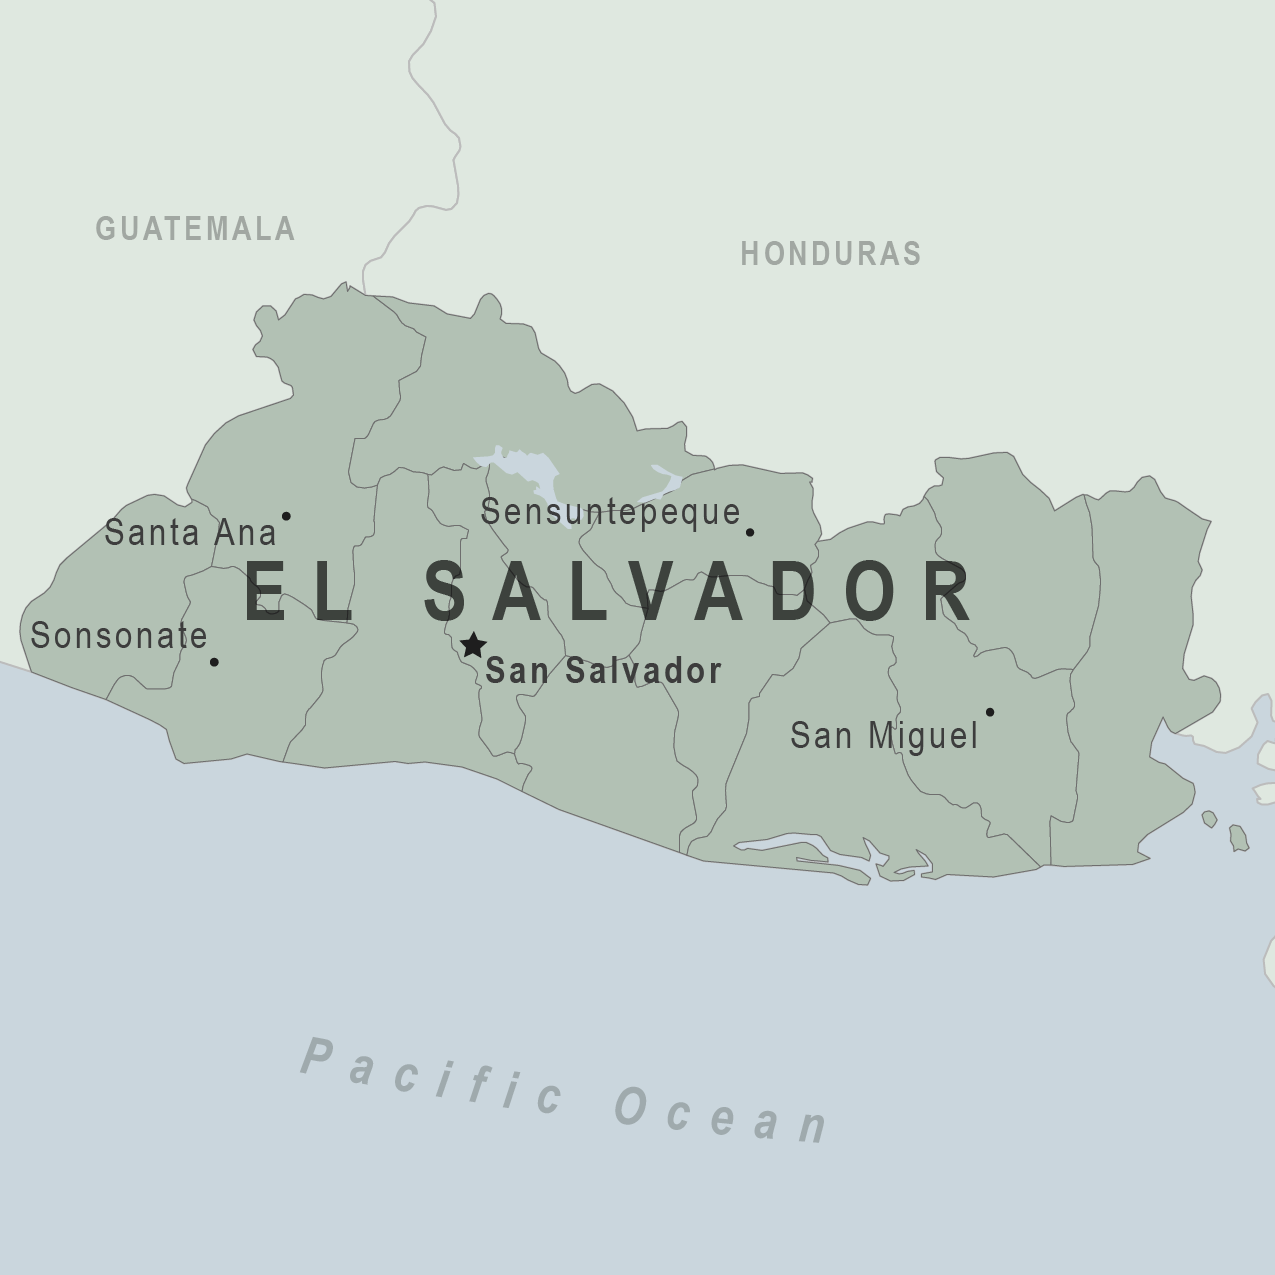 El Salvador - United States Department of State